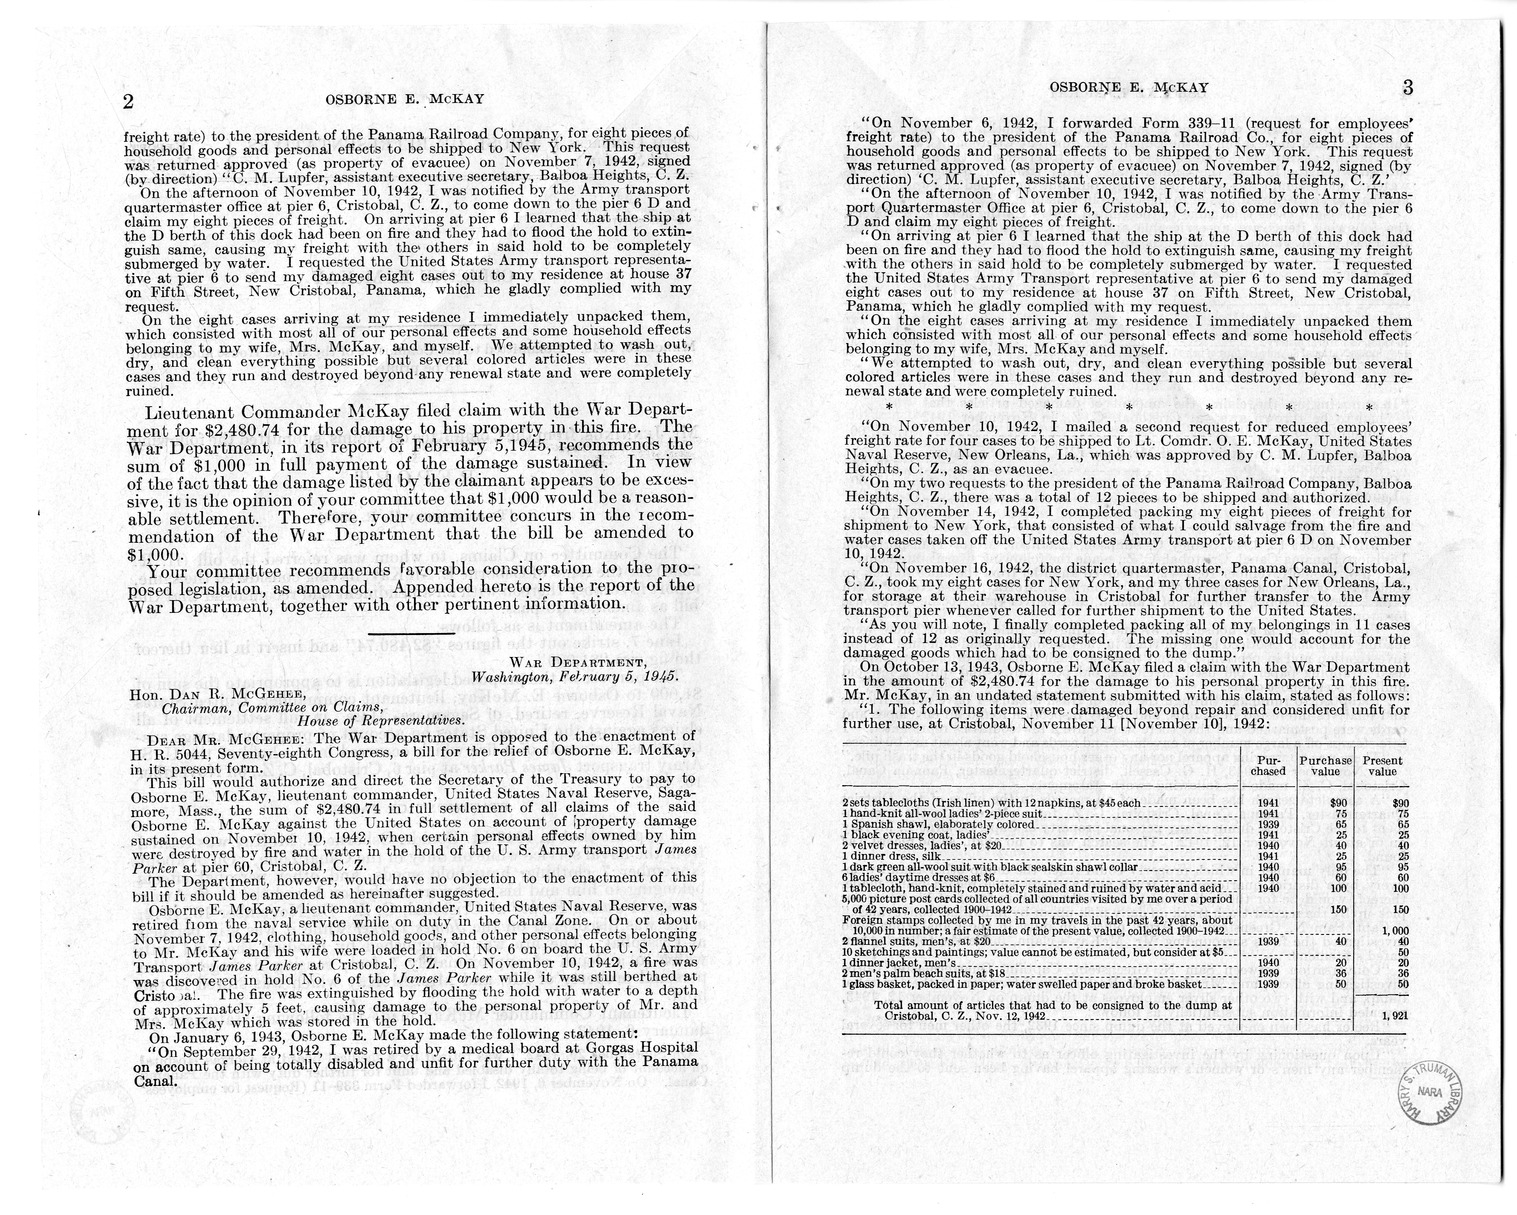 Memorandum from Frederick Bailey to M. C. Latta, H.R. 2336, For the Relief of Osborne E. McKay, with Attachments